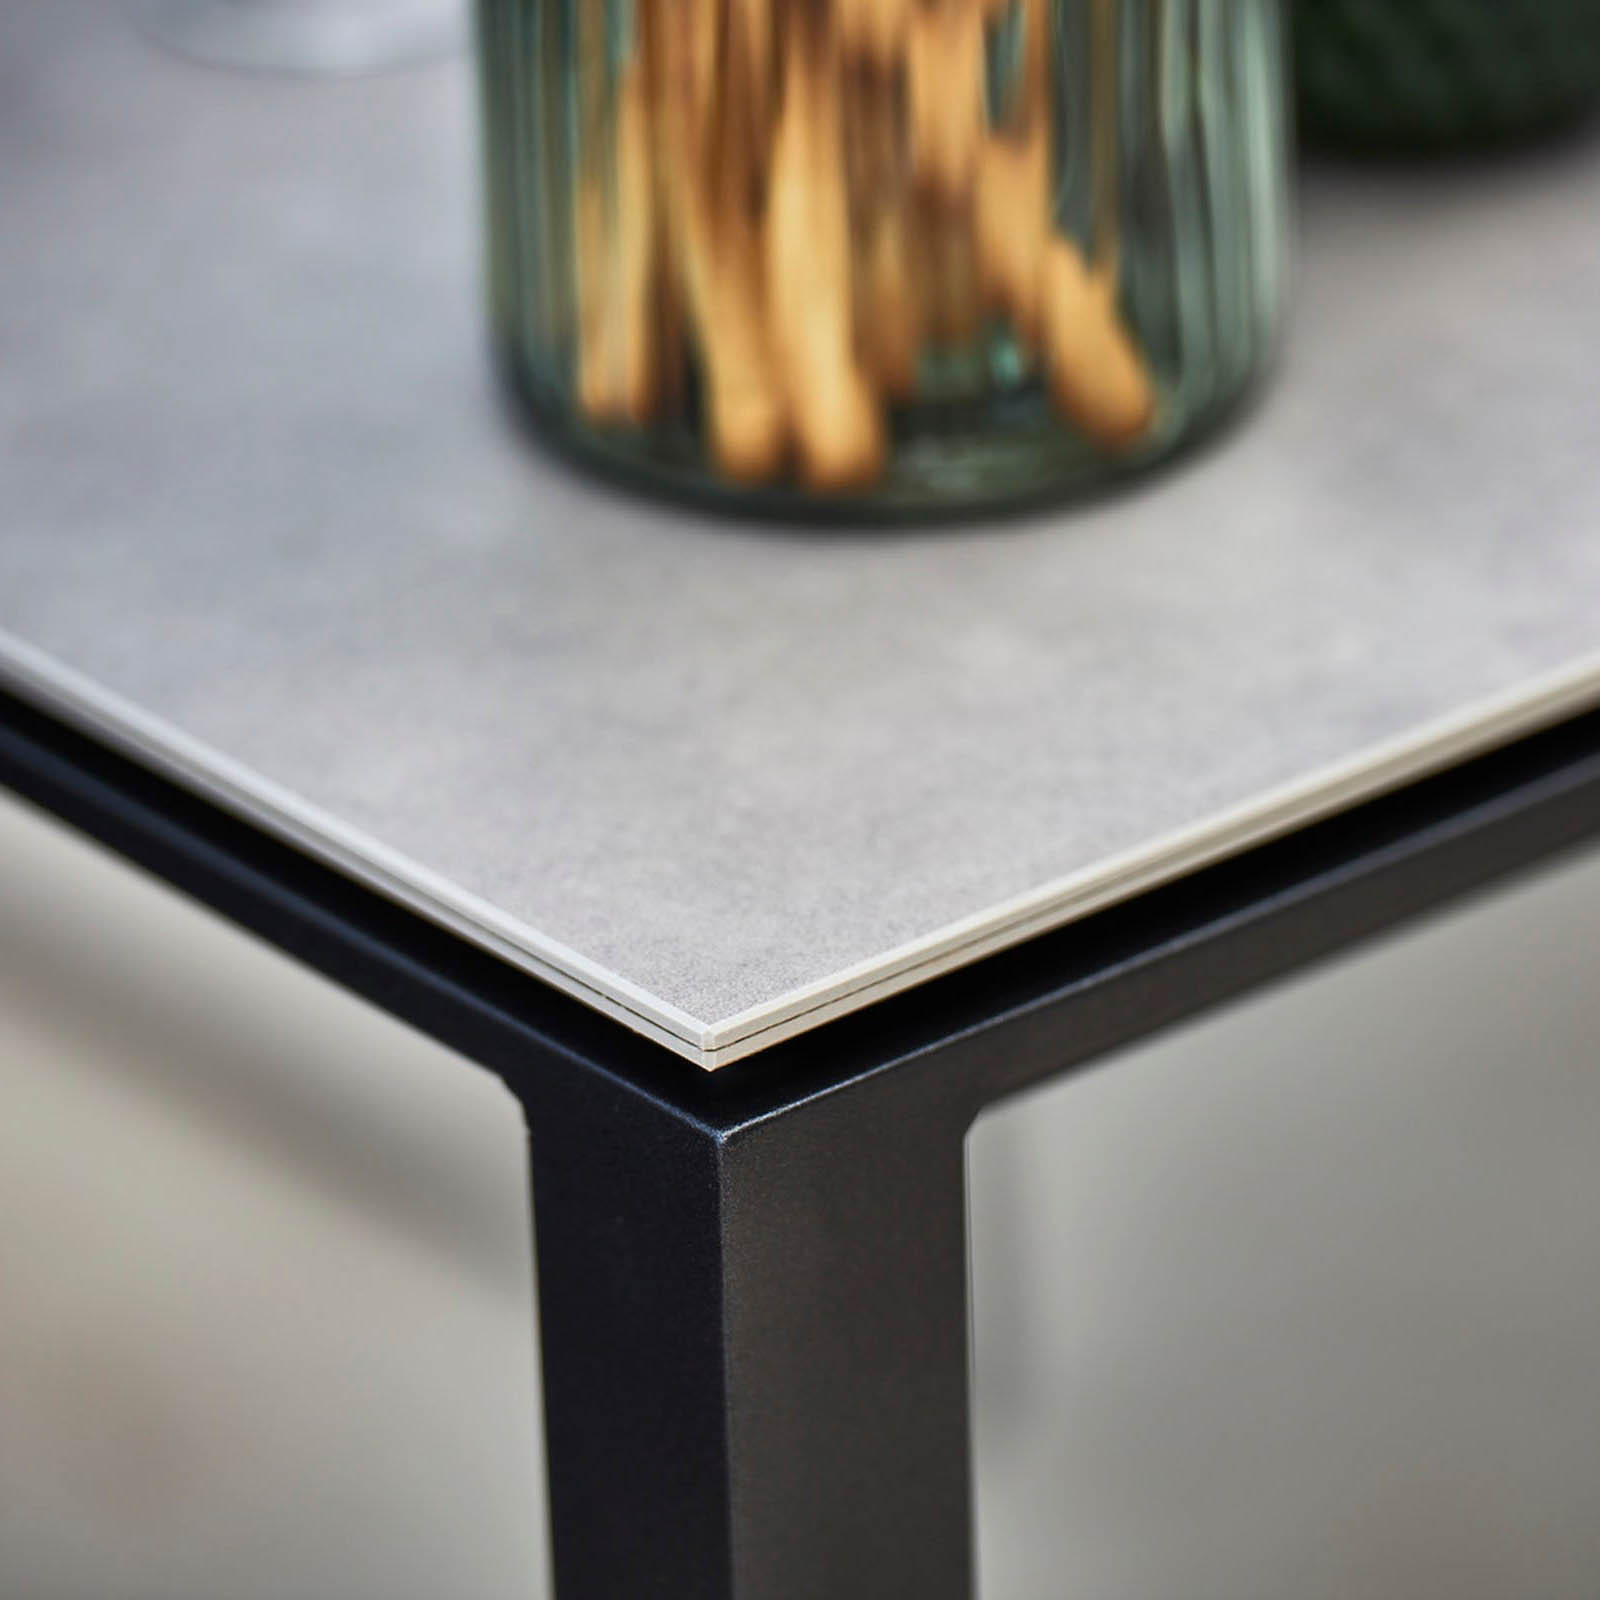 Pure Tisch in 100x100 cm aus Aluminium in Light Grey mit Tischplatte aus Ceramic in Concrete Grey